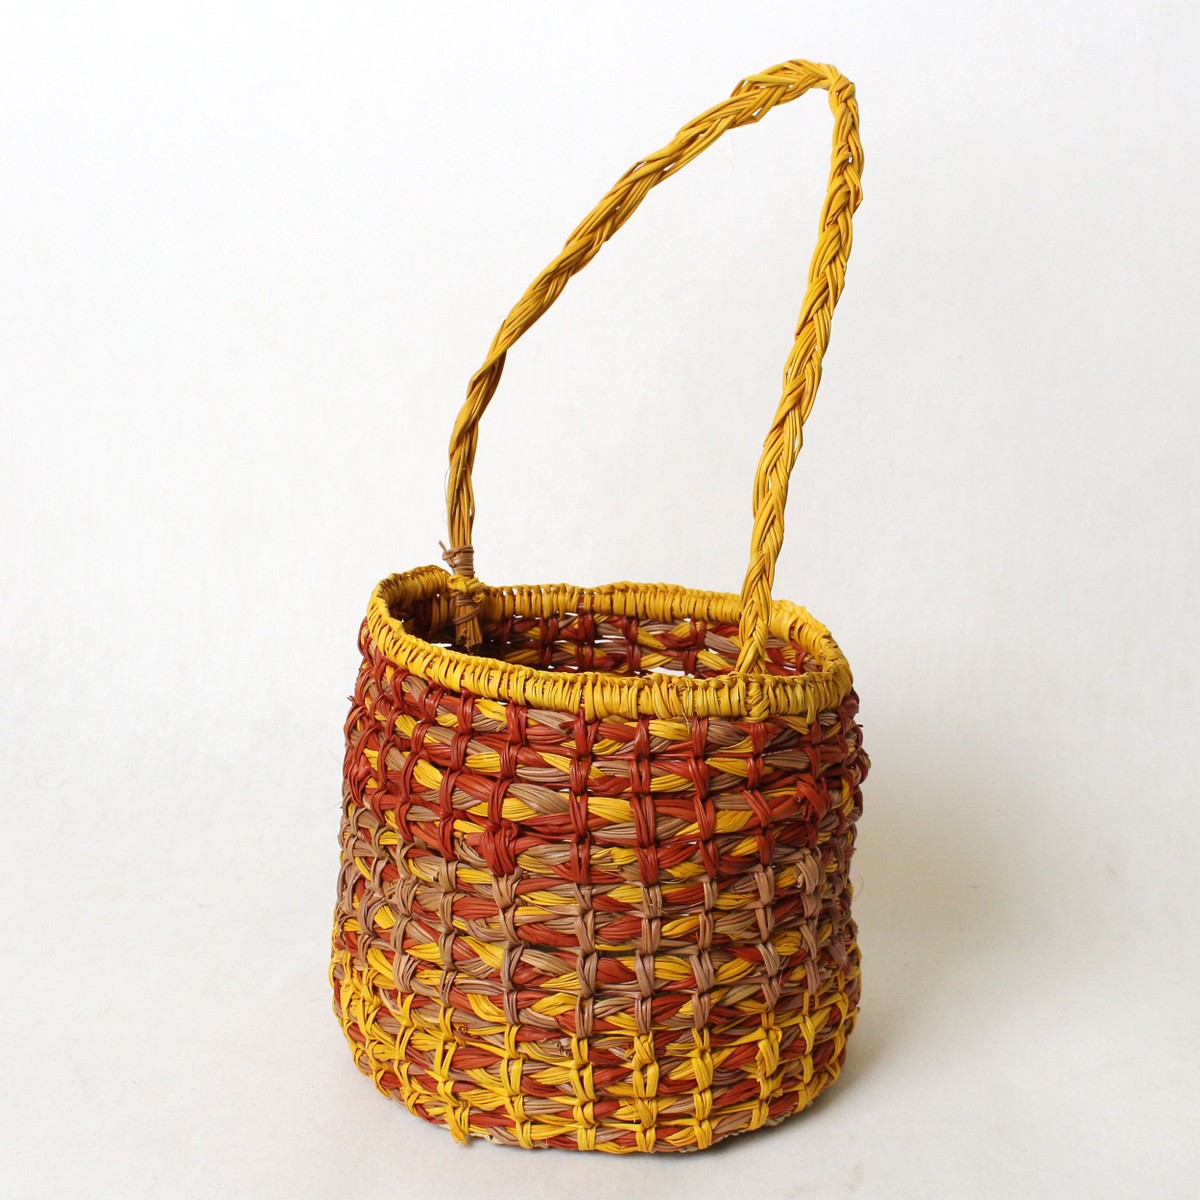 Basket by Janet Guyula